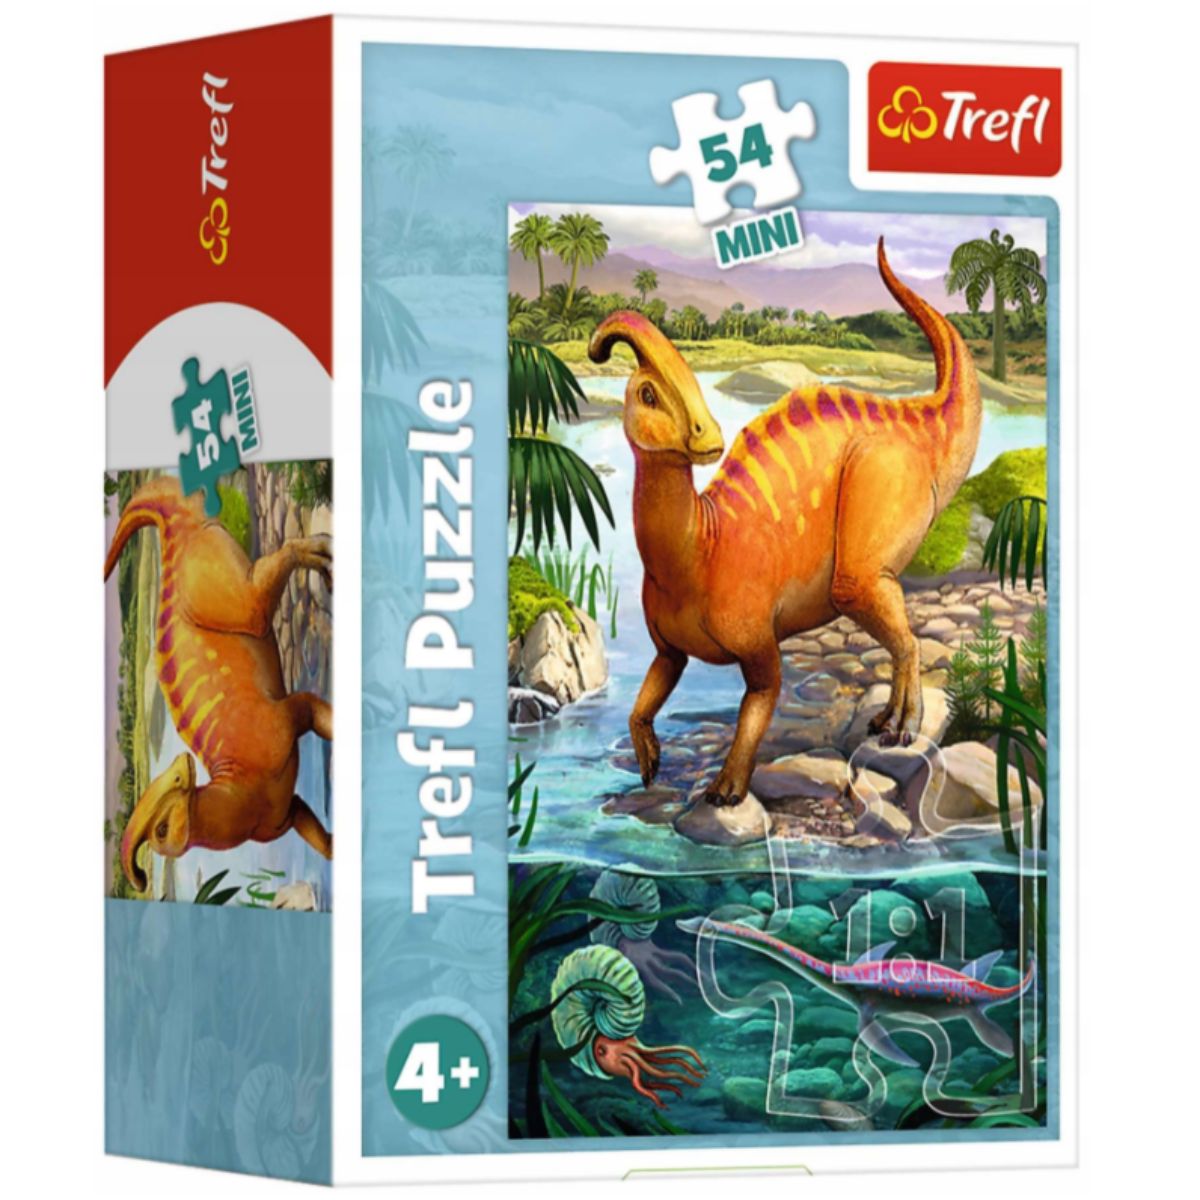 Puzzle Trefl Mini 54 piese, Uimitorii dinozauri, 19730